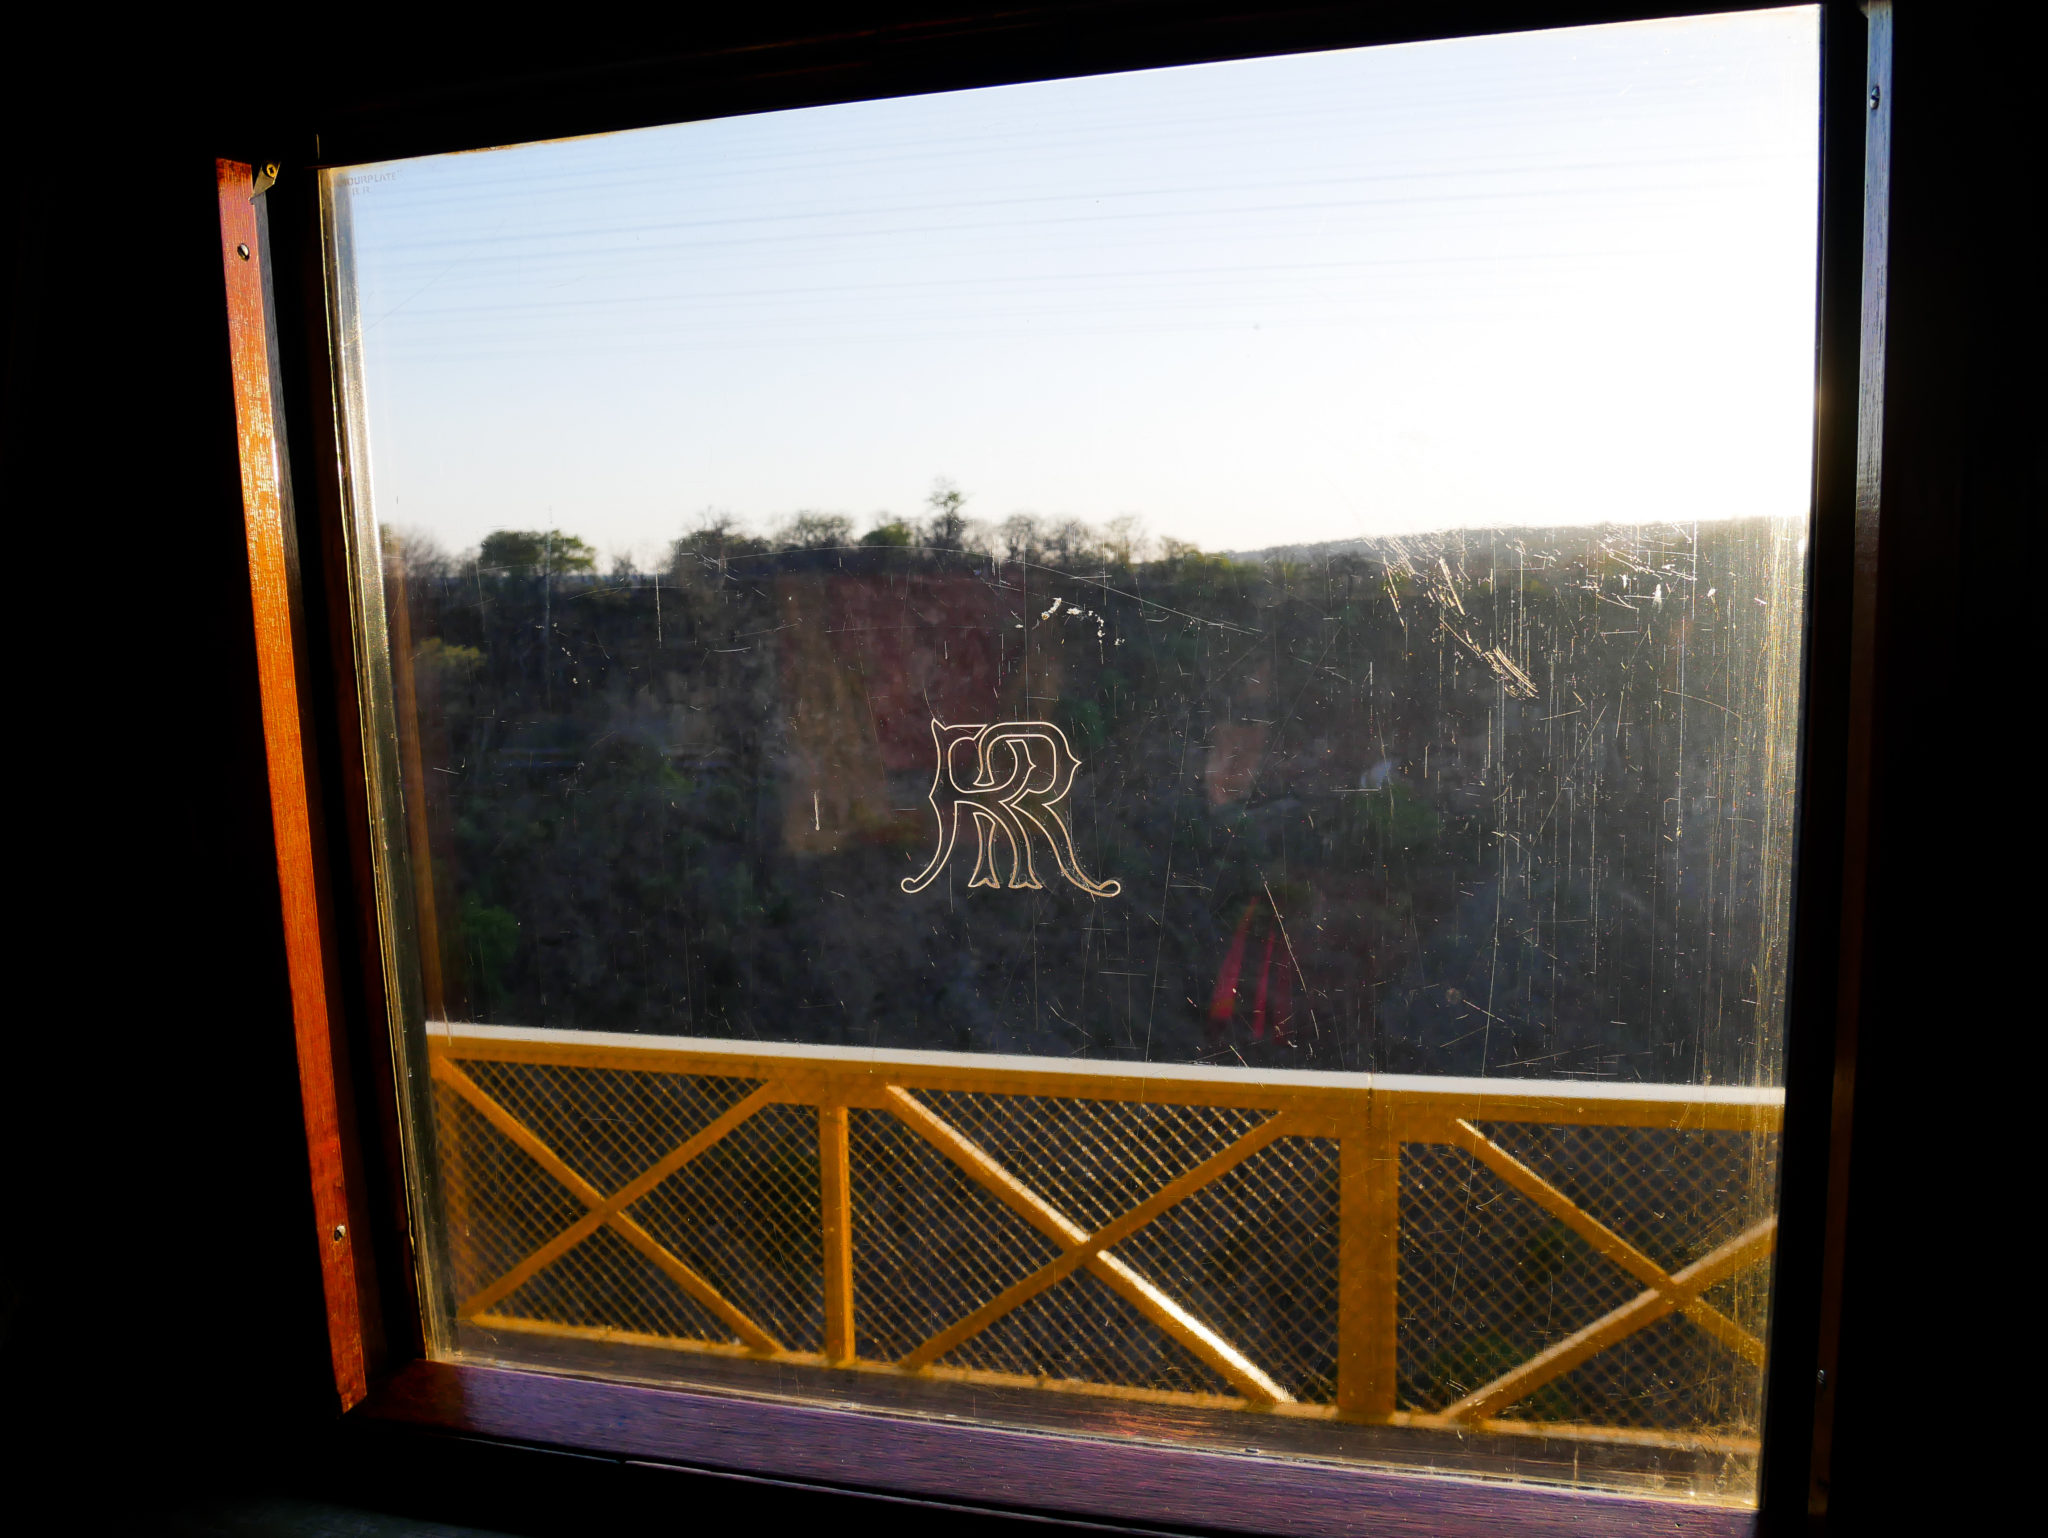 Evening sun shines through the Rovos Rail logo on the window of the Royal Livingstone Express train